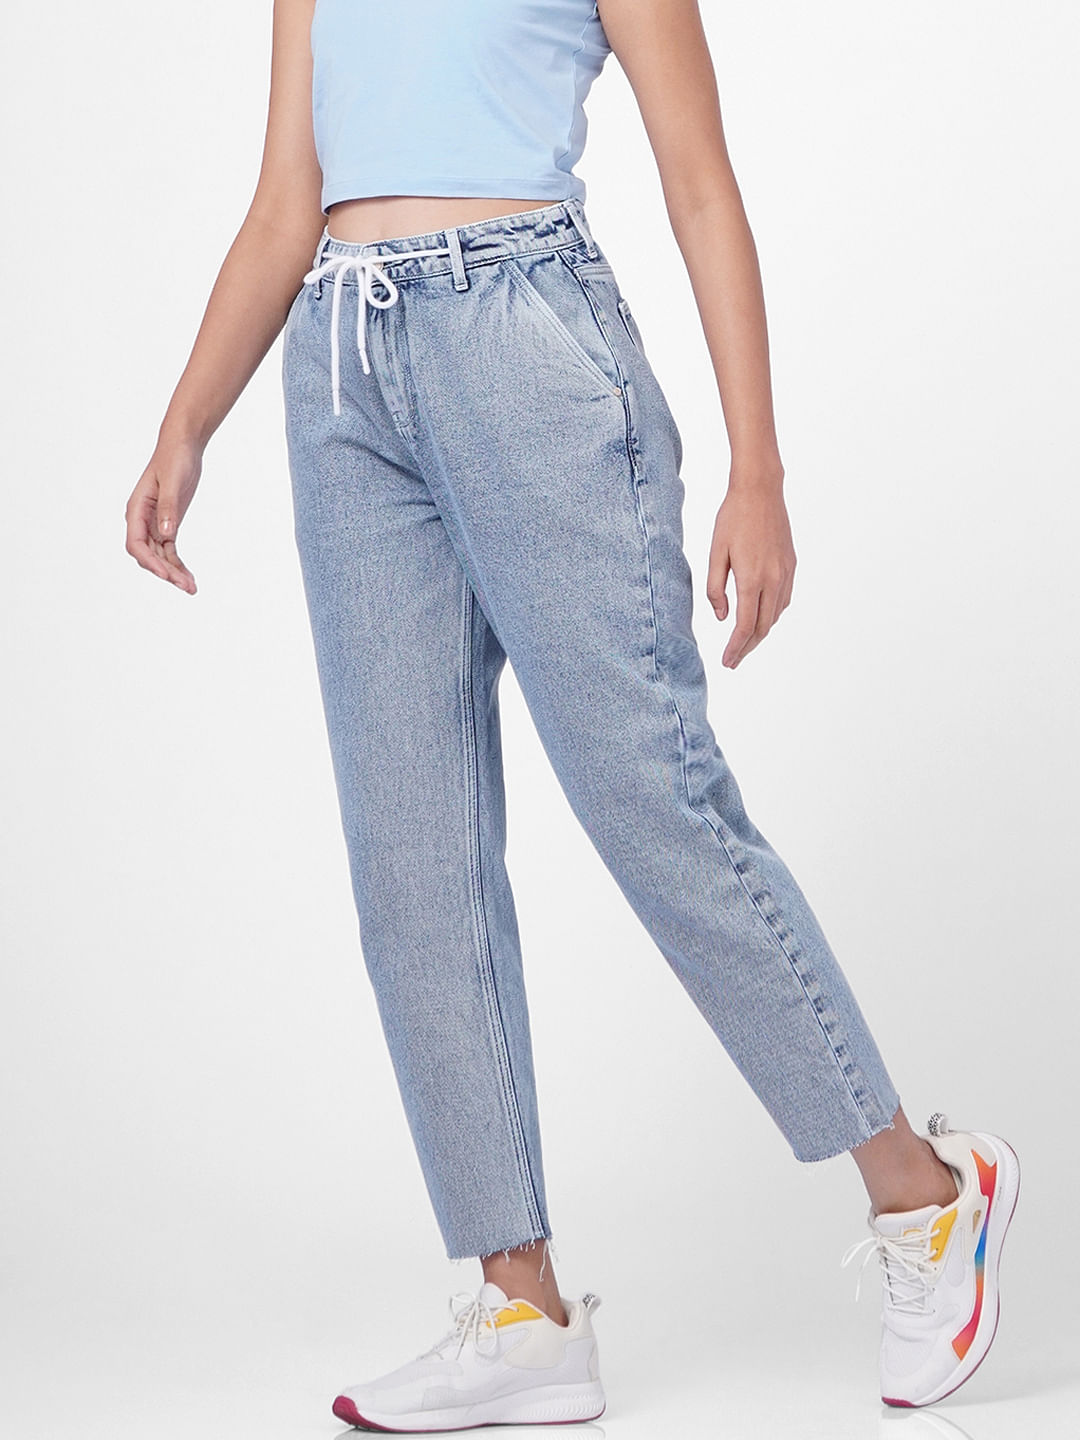 Teen Girls Beautiful Summer Trousers. Stock Image - Image of pants,  garment: 104359899